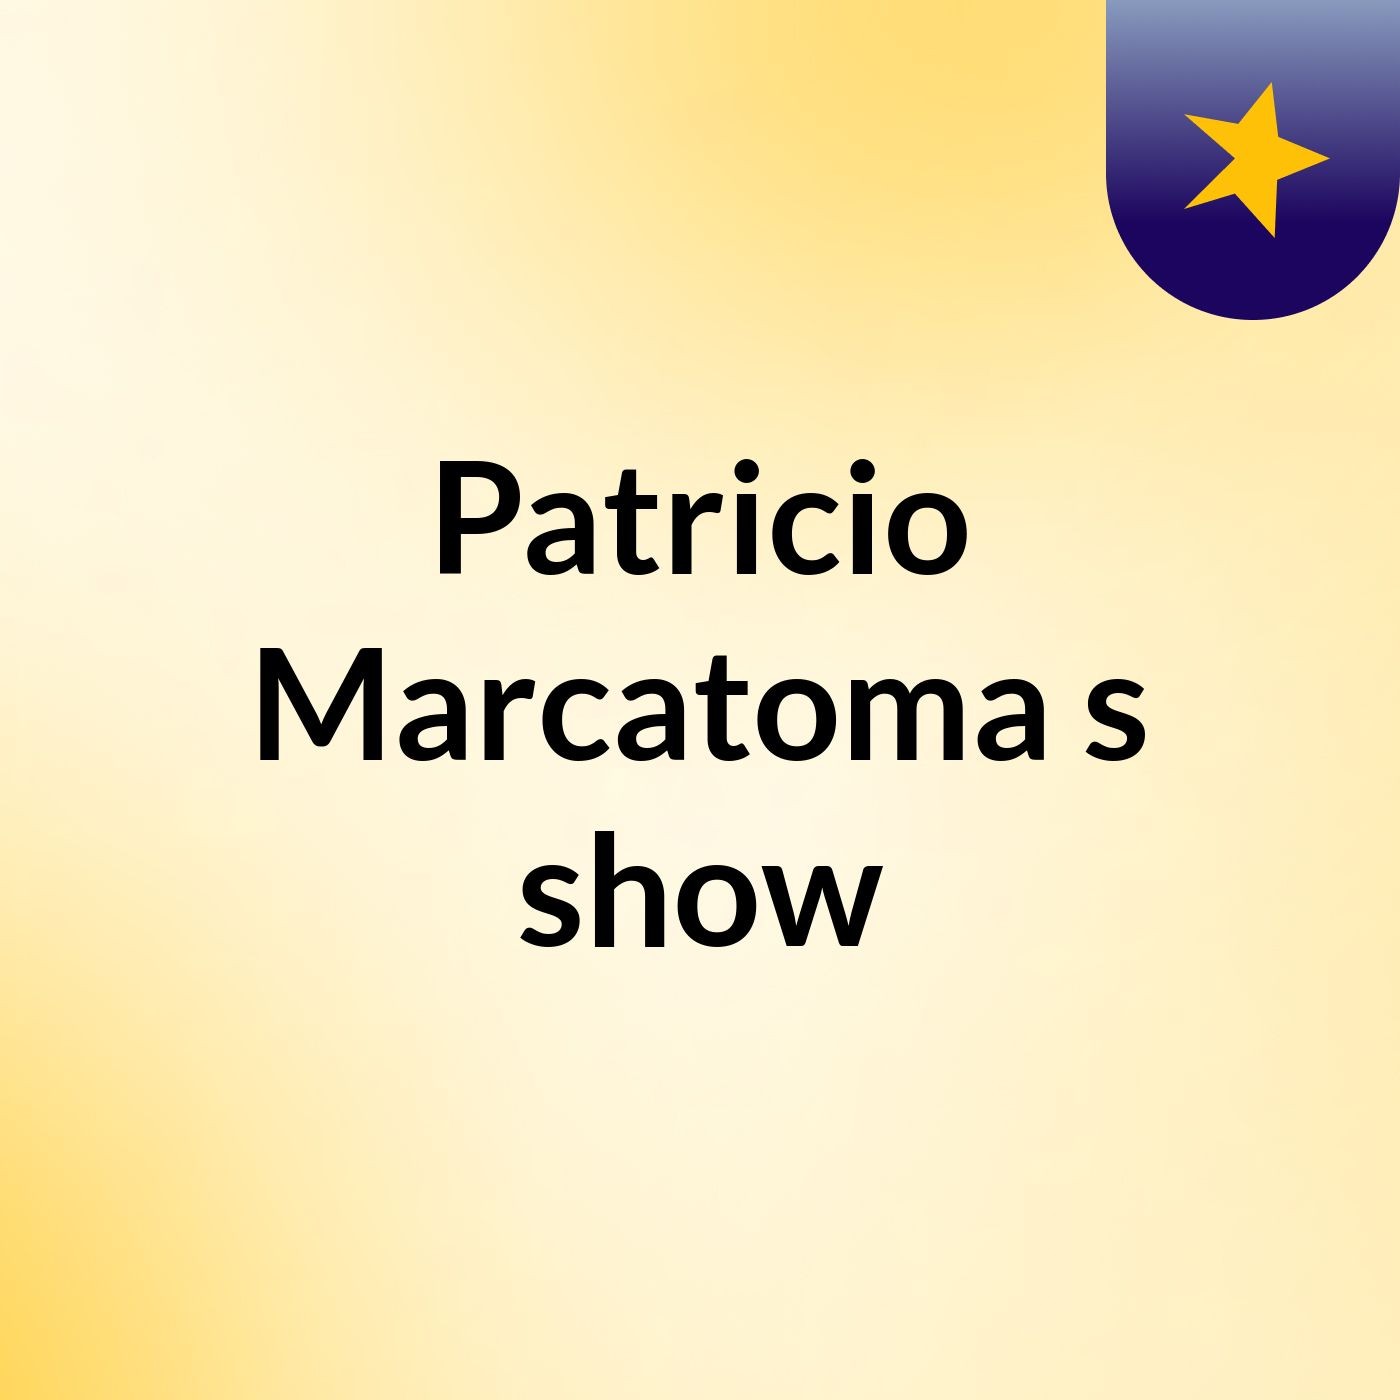 Patricio Marcatoma's show